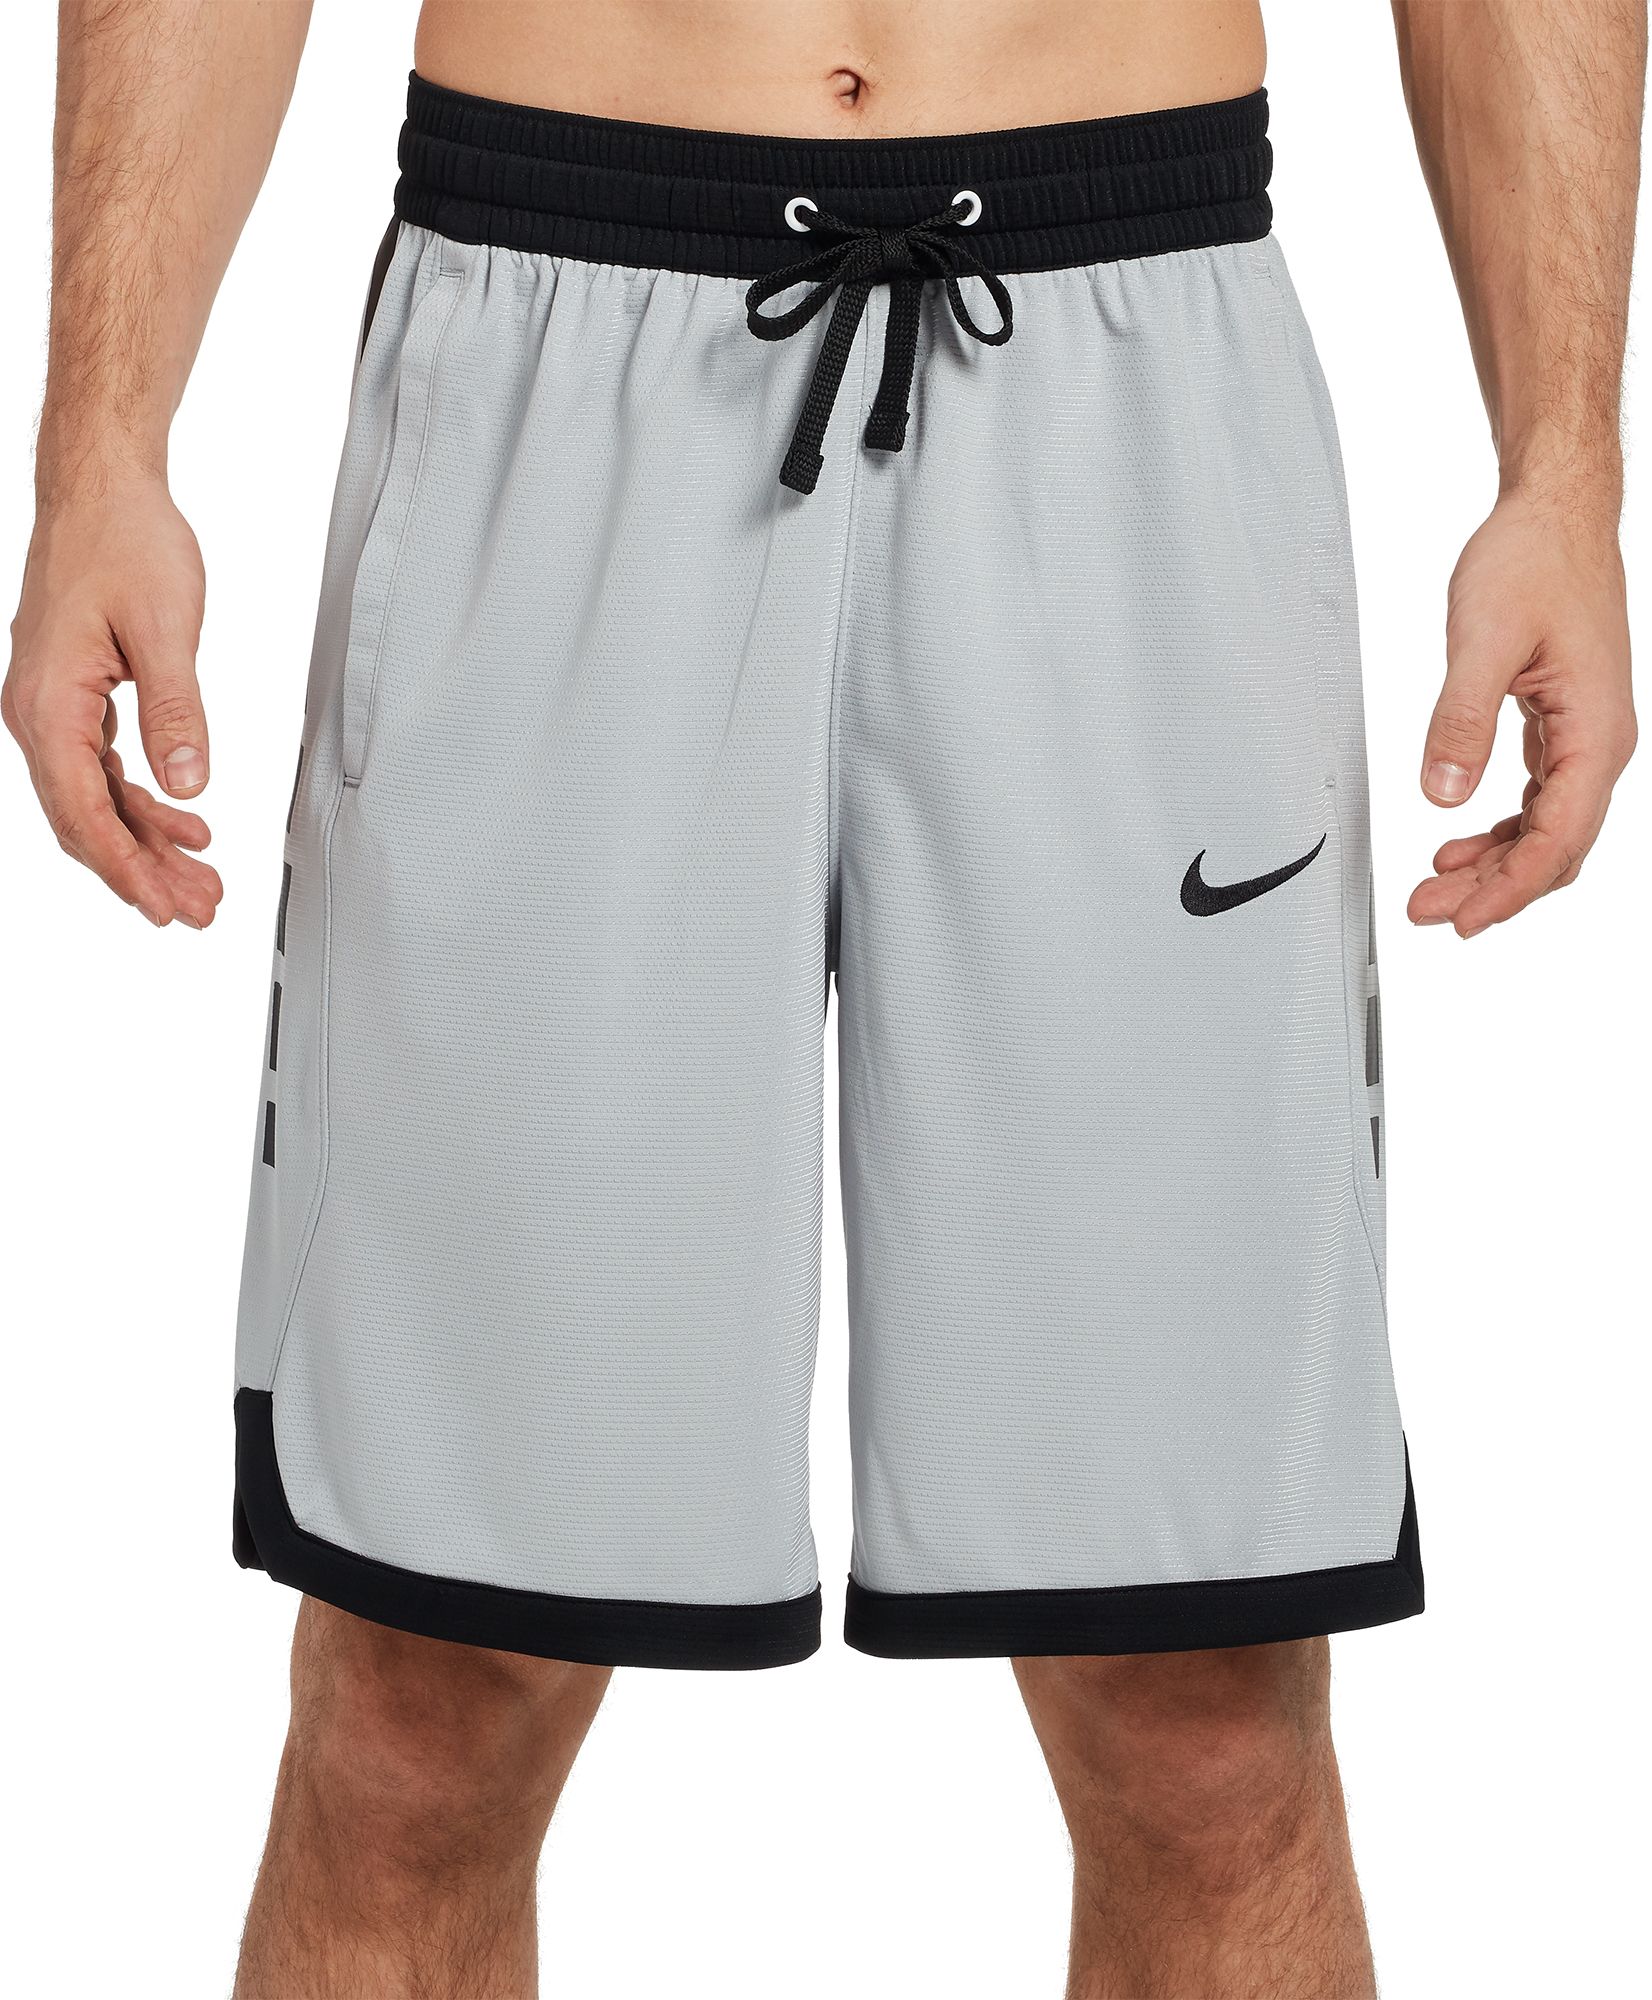 nike dry elite stripe basketball shorts